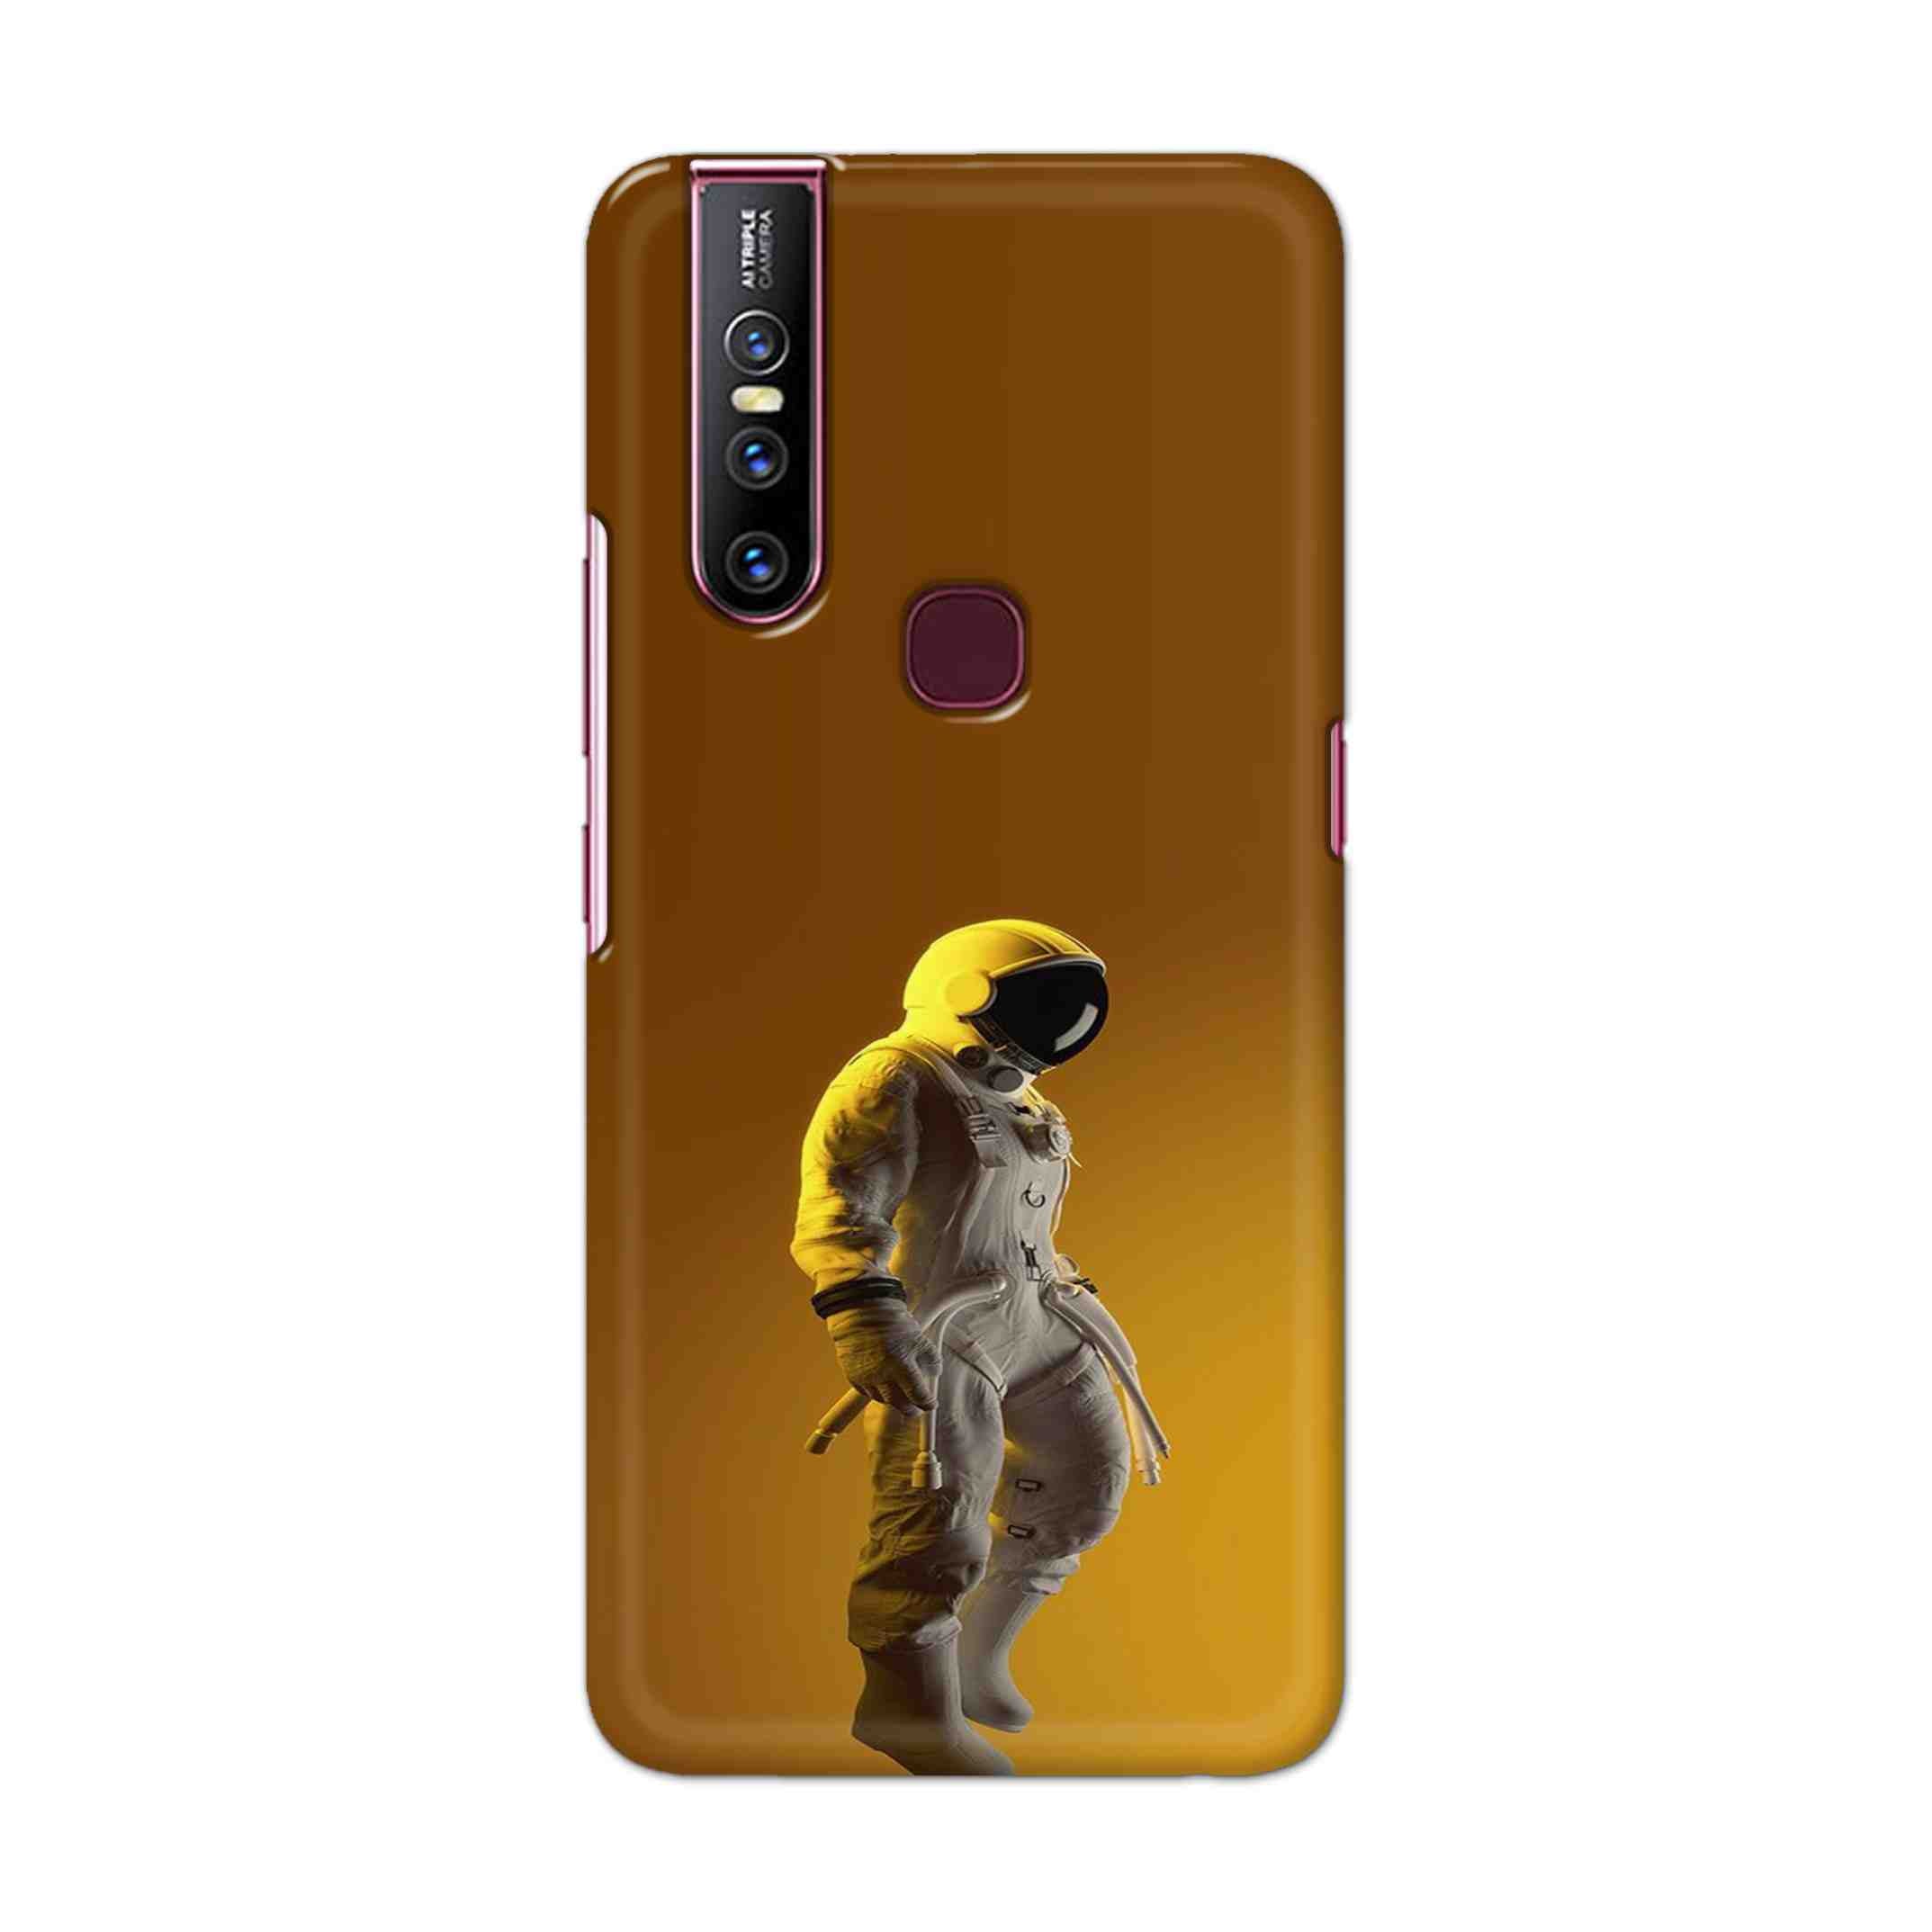 Buy Yellow Astronaut Hard Back Mobile Phone Case Cover For Vivo V15 Online